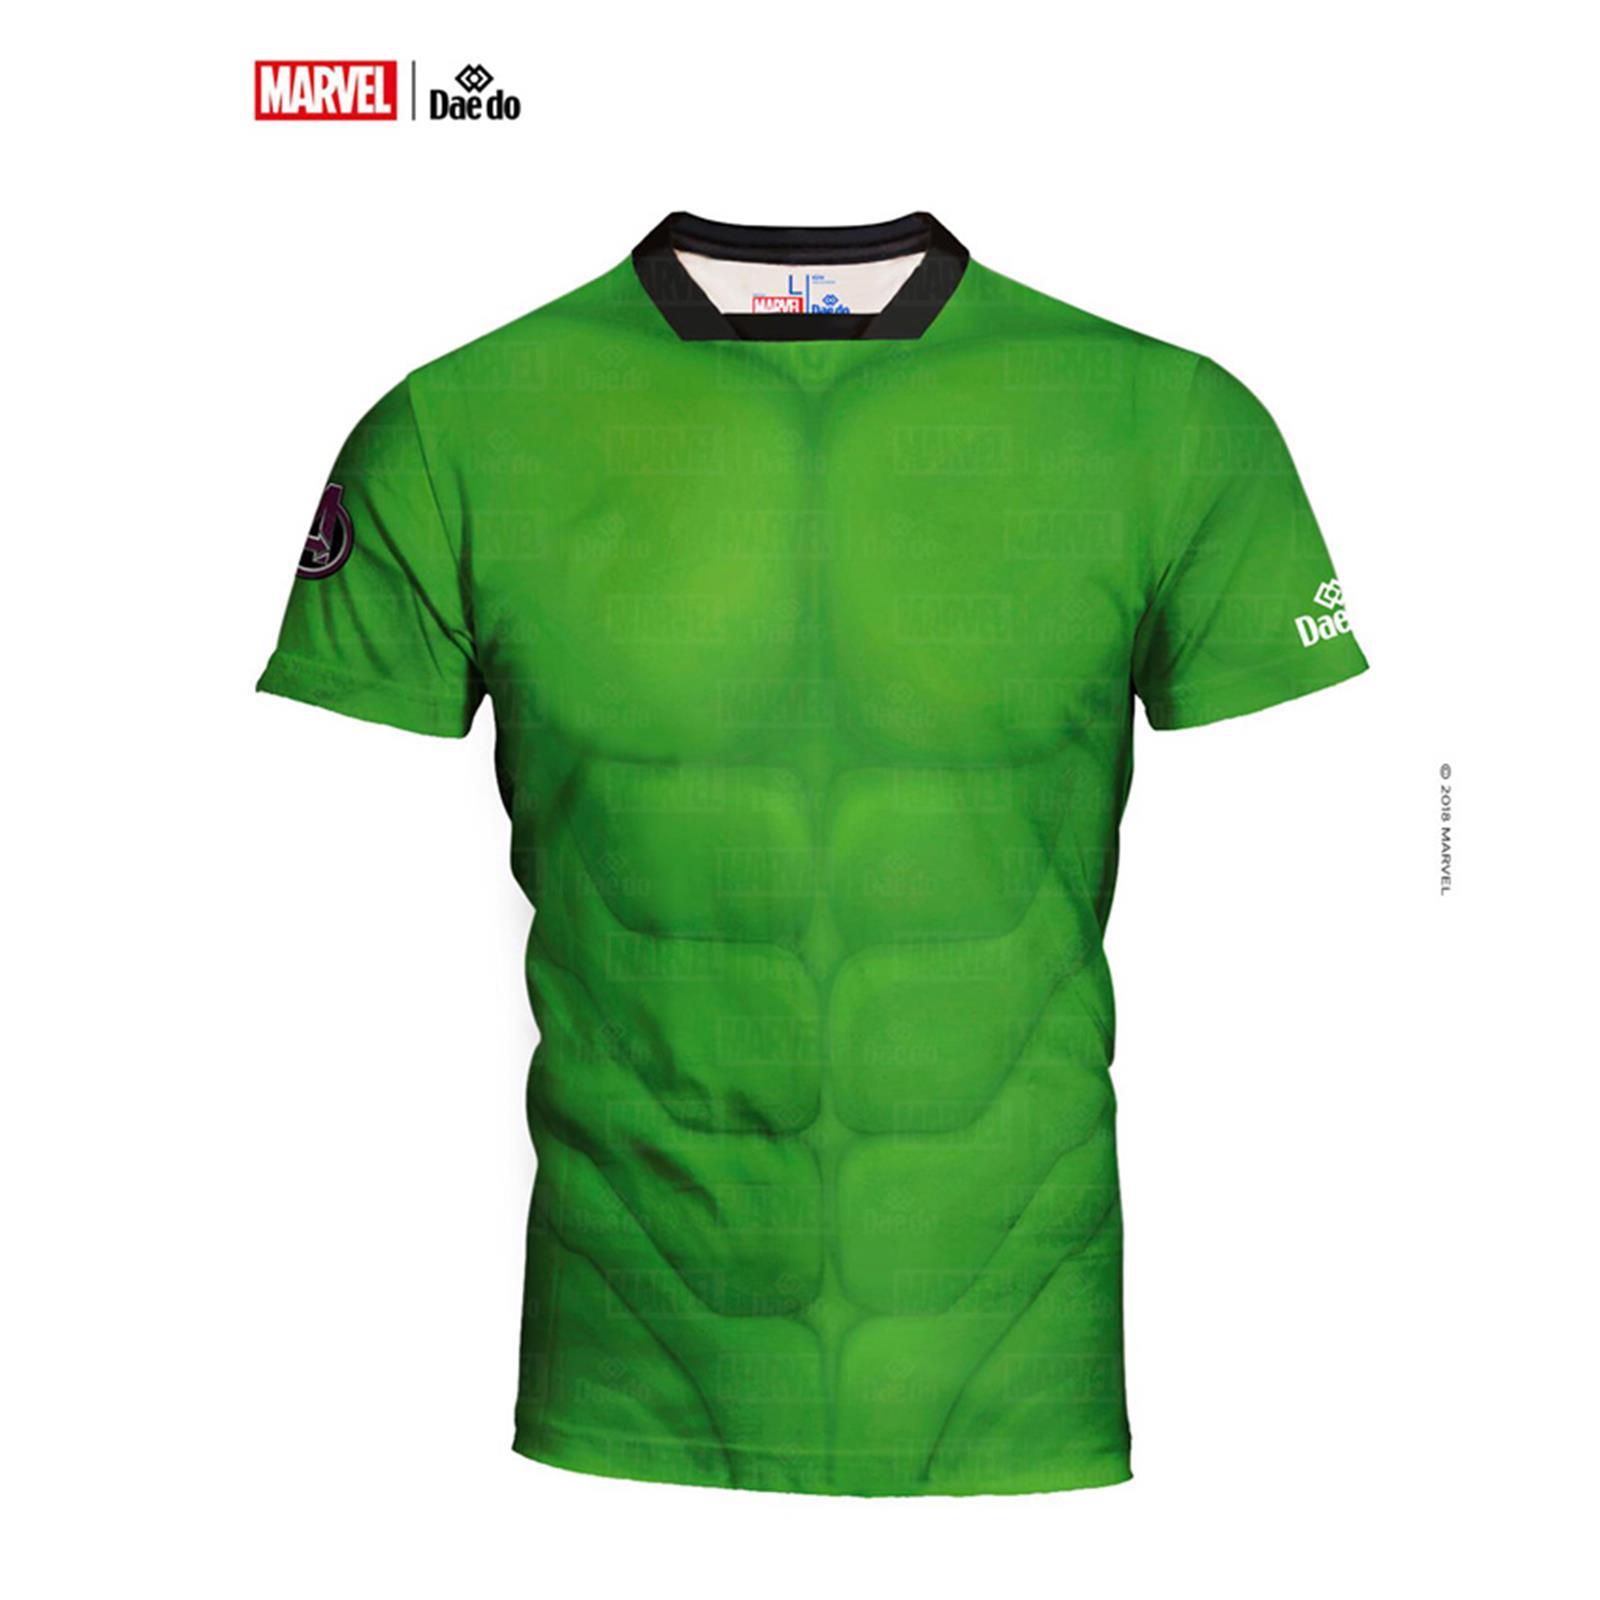 Dae Do Maglietta Hulk Full Print Slim Fit (16 - VERDE)